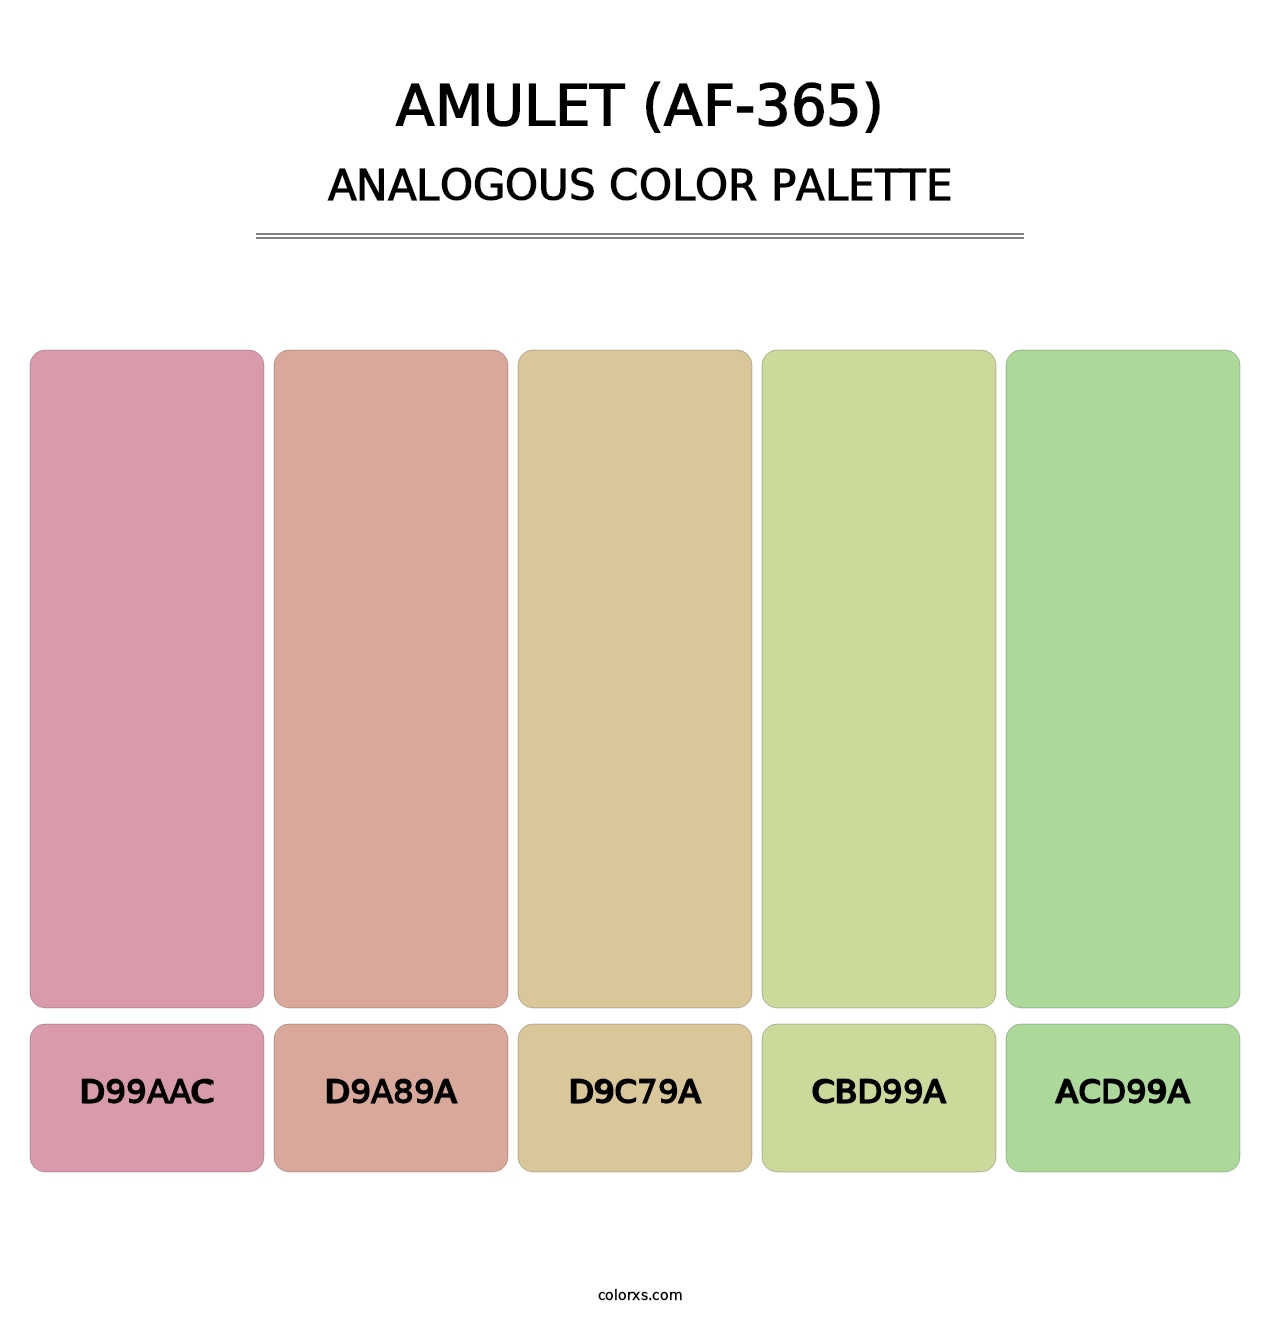 Amulet (AF-365) - Analogous Color Palette